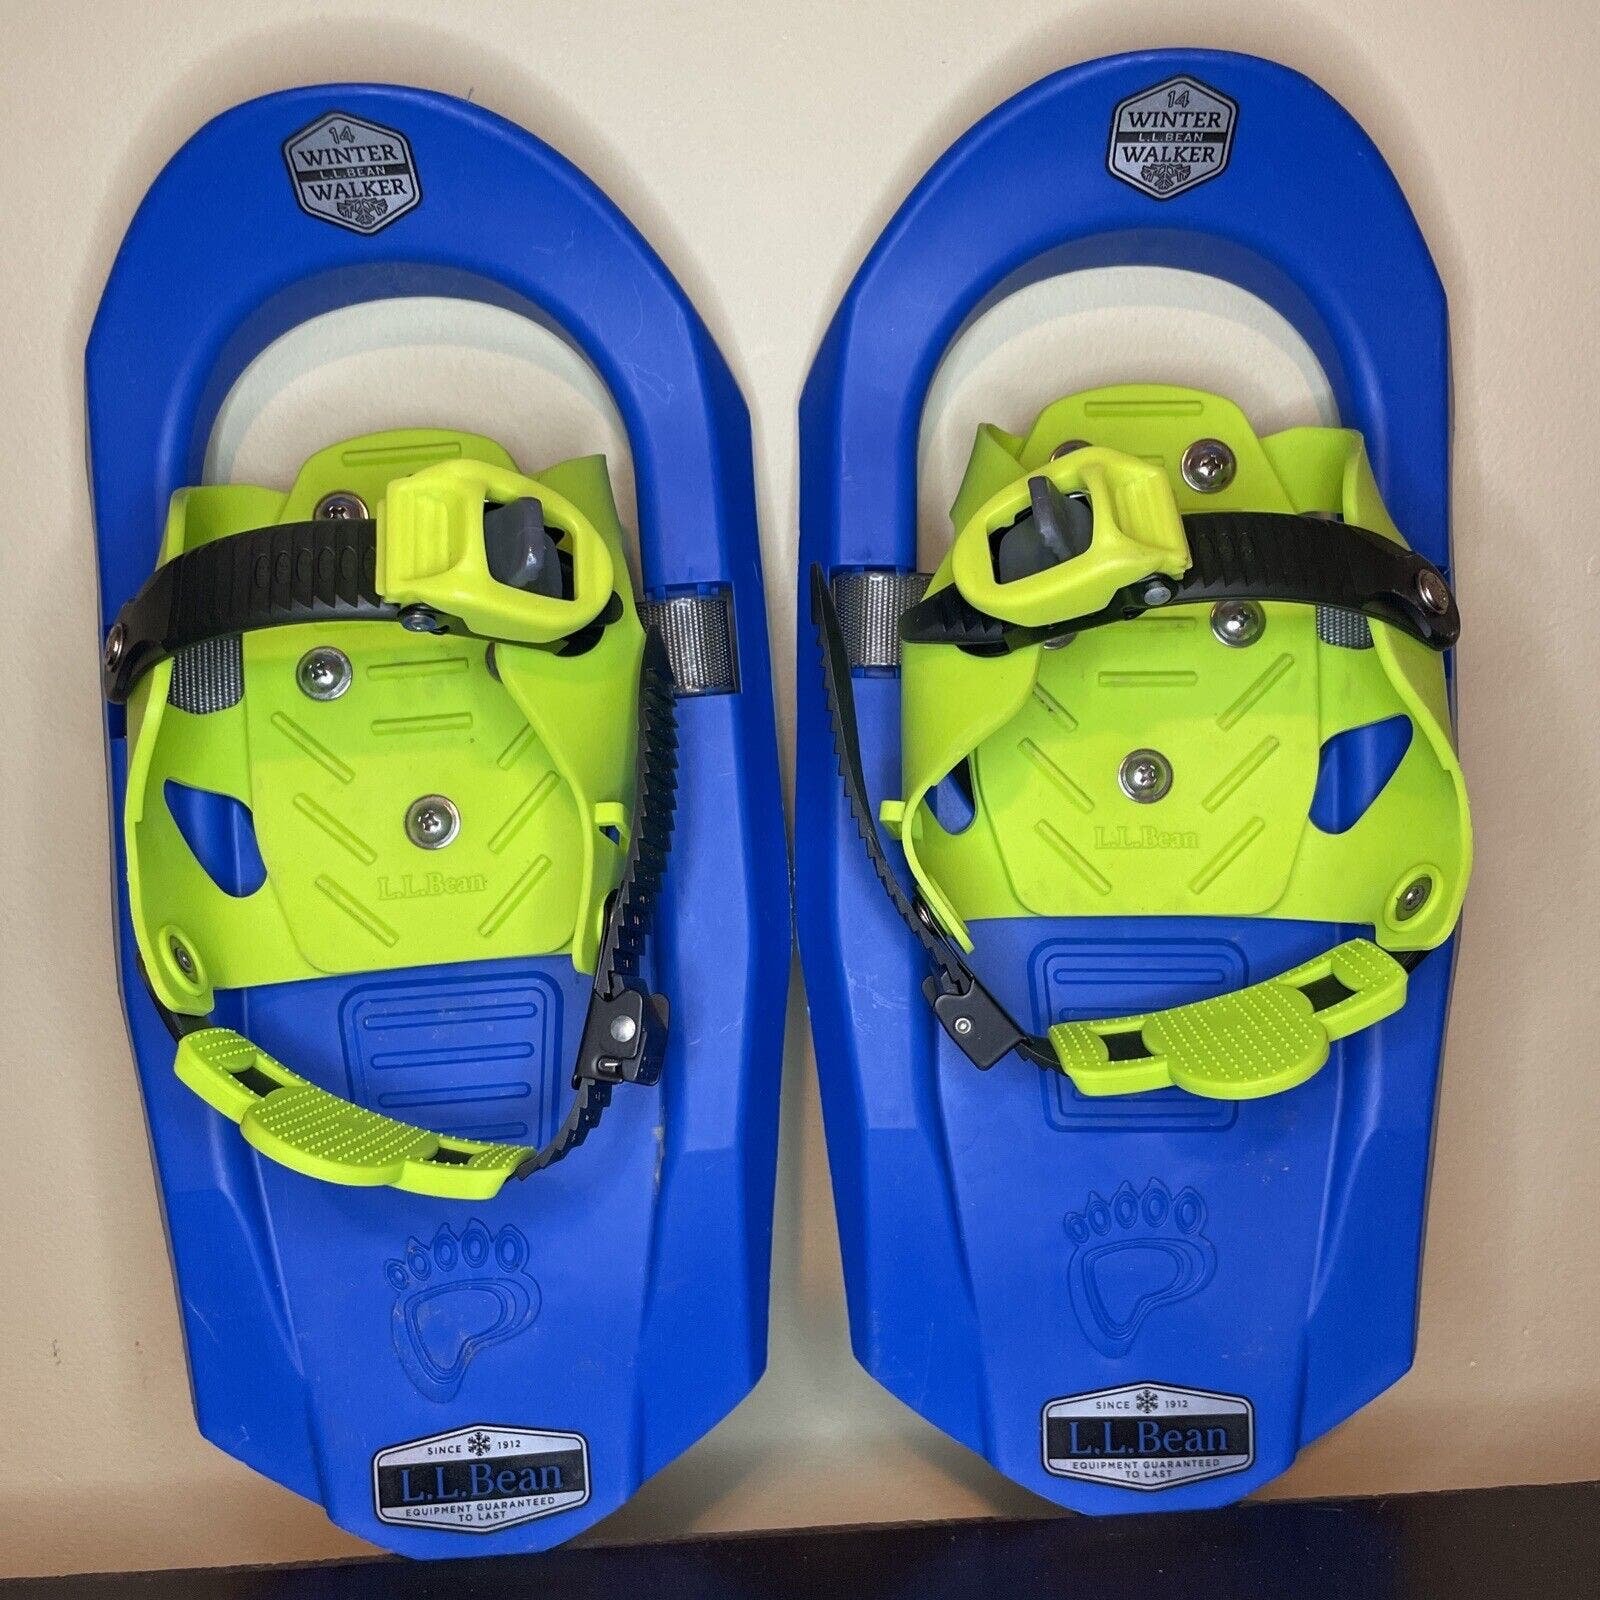 LL Bean Winter Walker 14 Kids Snowshoes Green & Blue EXCELLENT Condition pyl0Sk09k